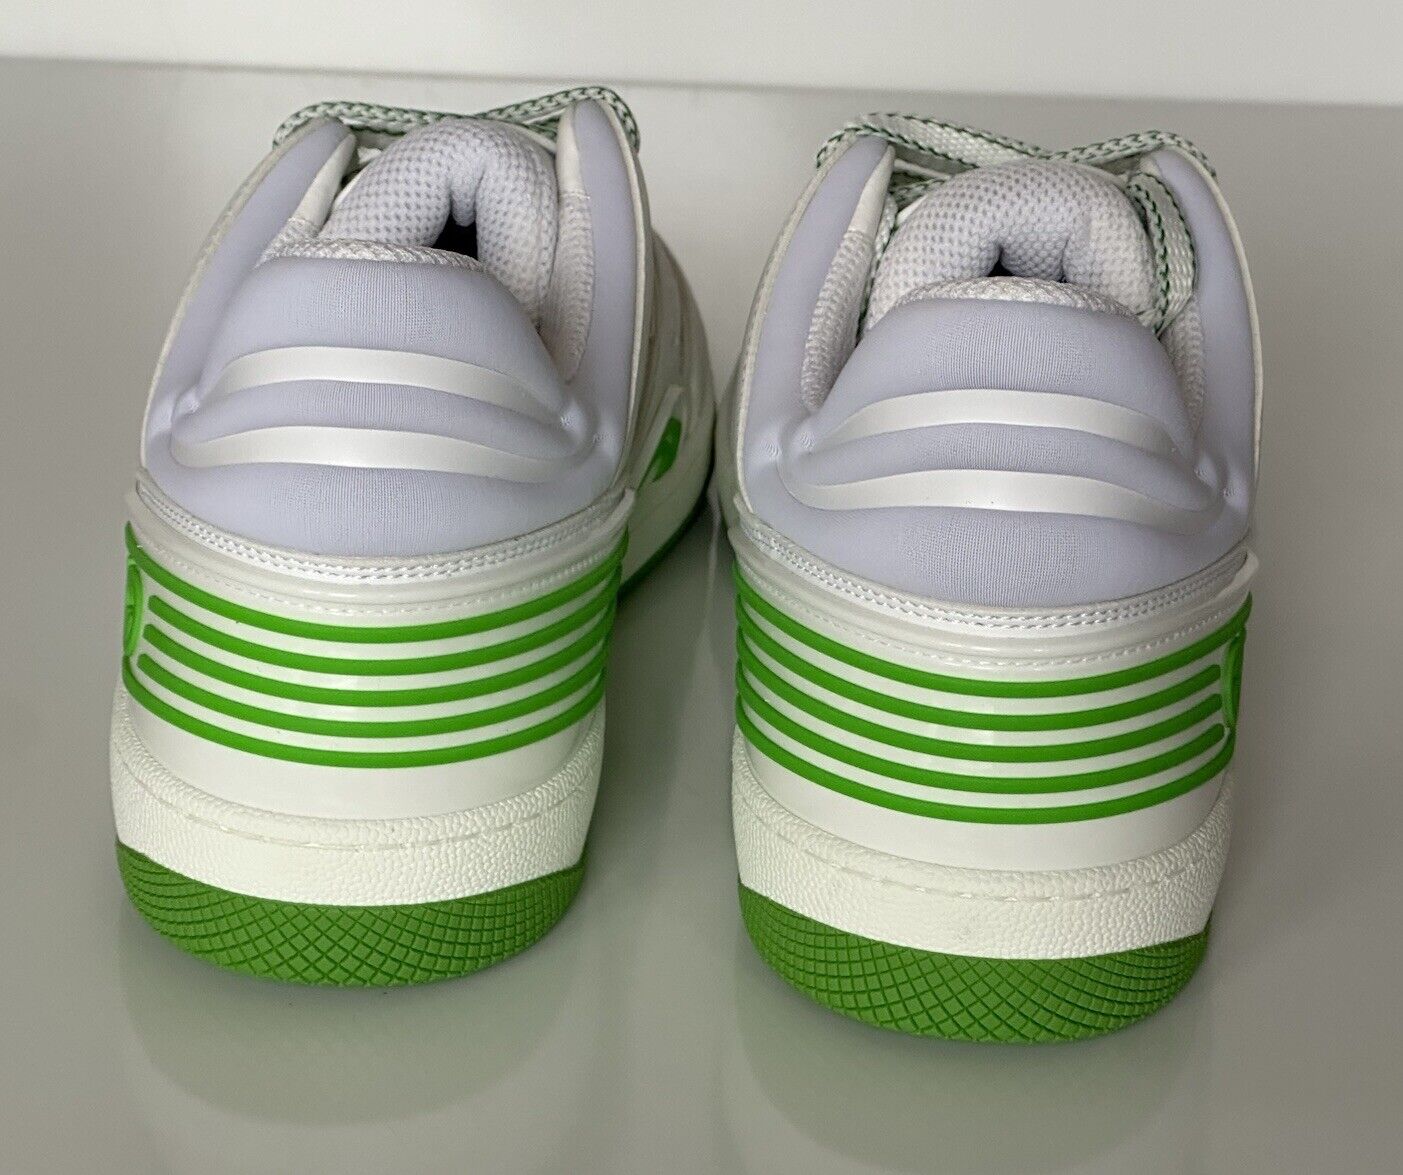 Gucci Demetra GG Men's Low-top Green/White Sneakers 10.5 US Gucci 10 698785 NIB